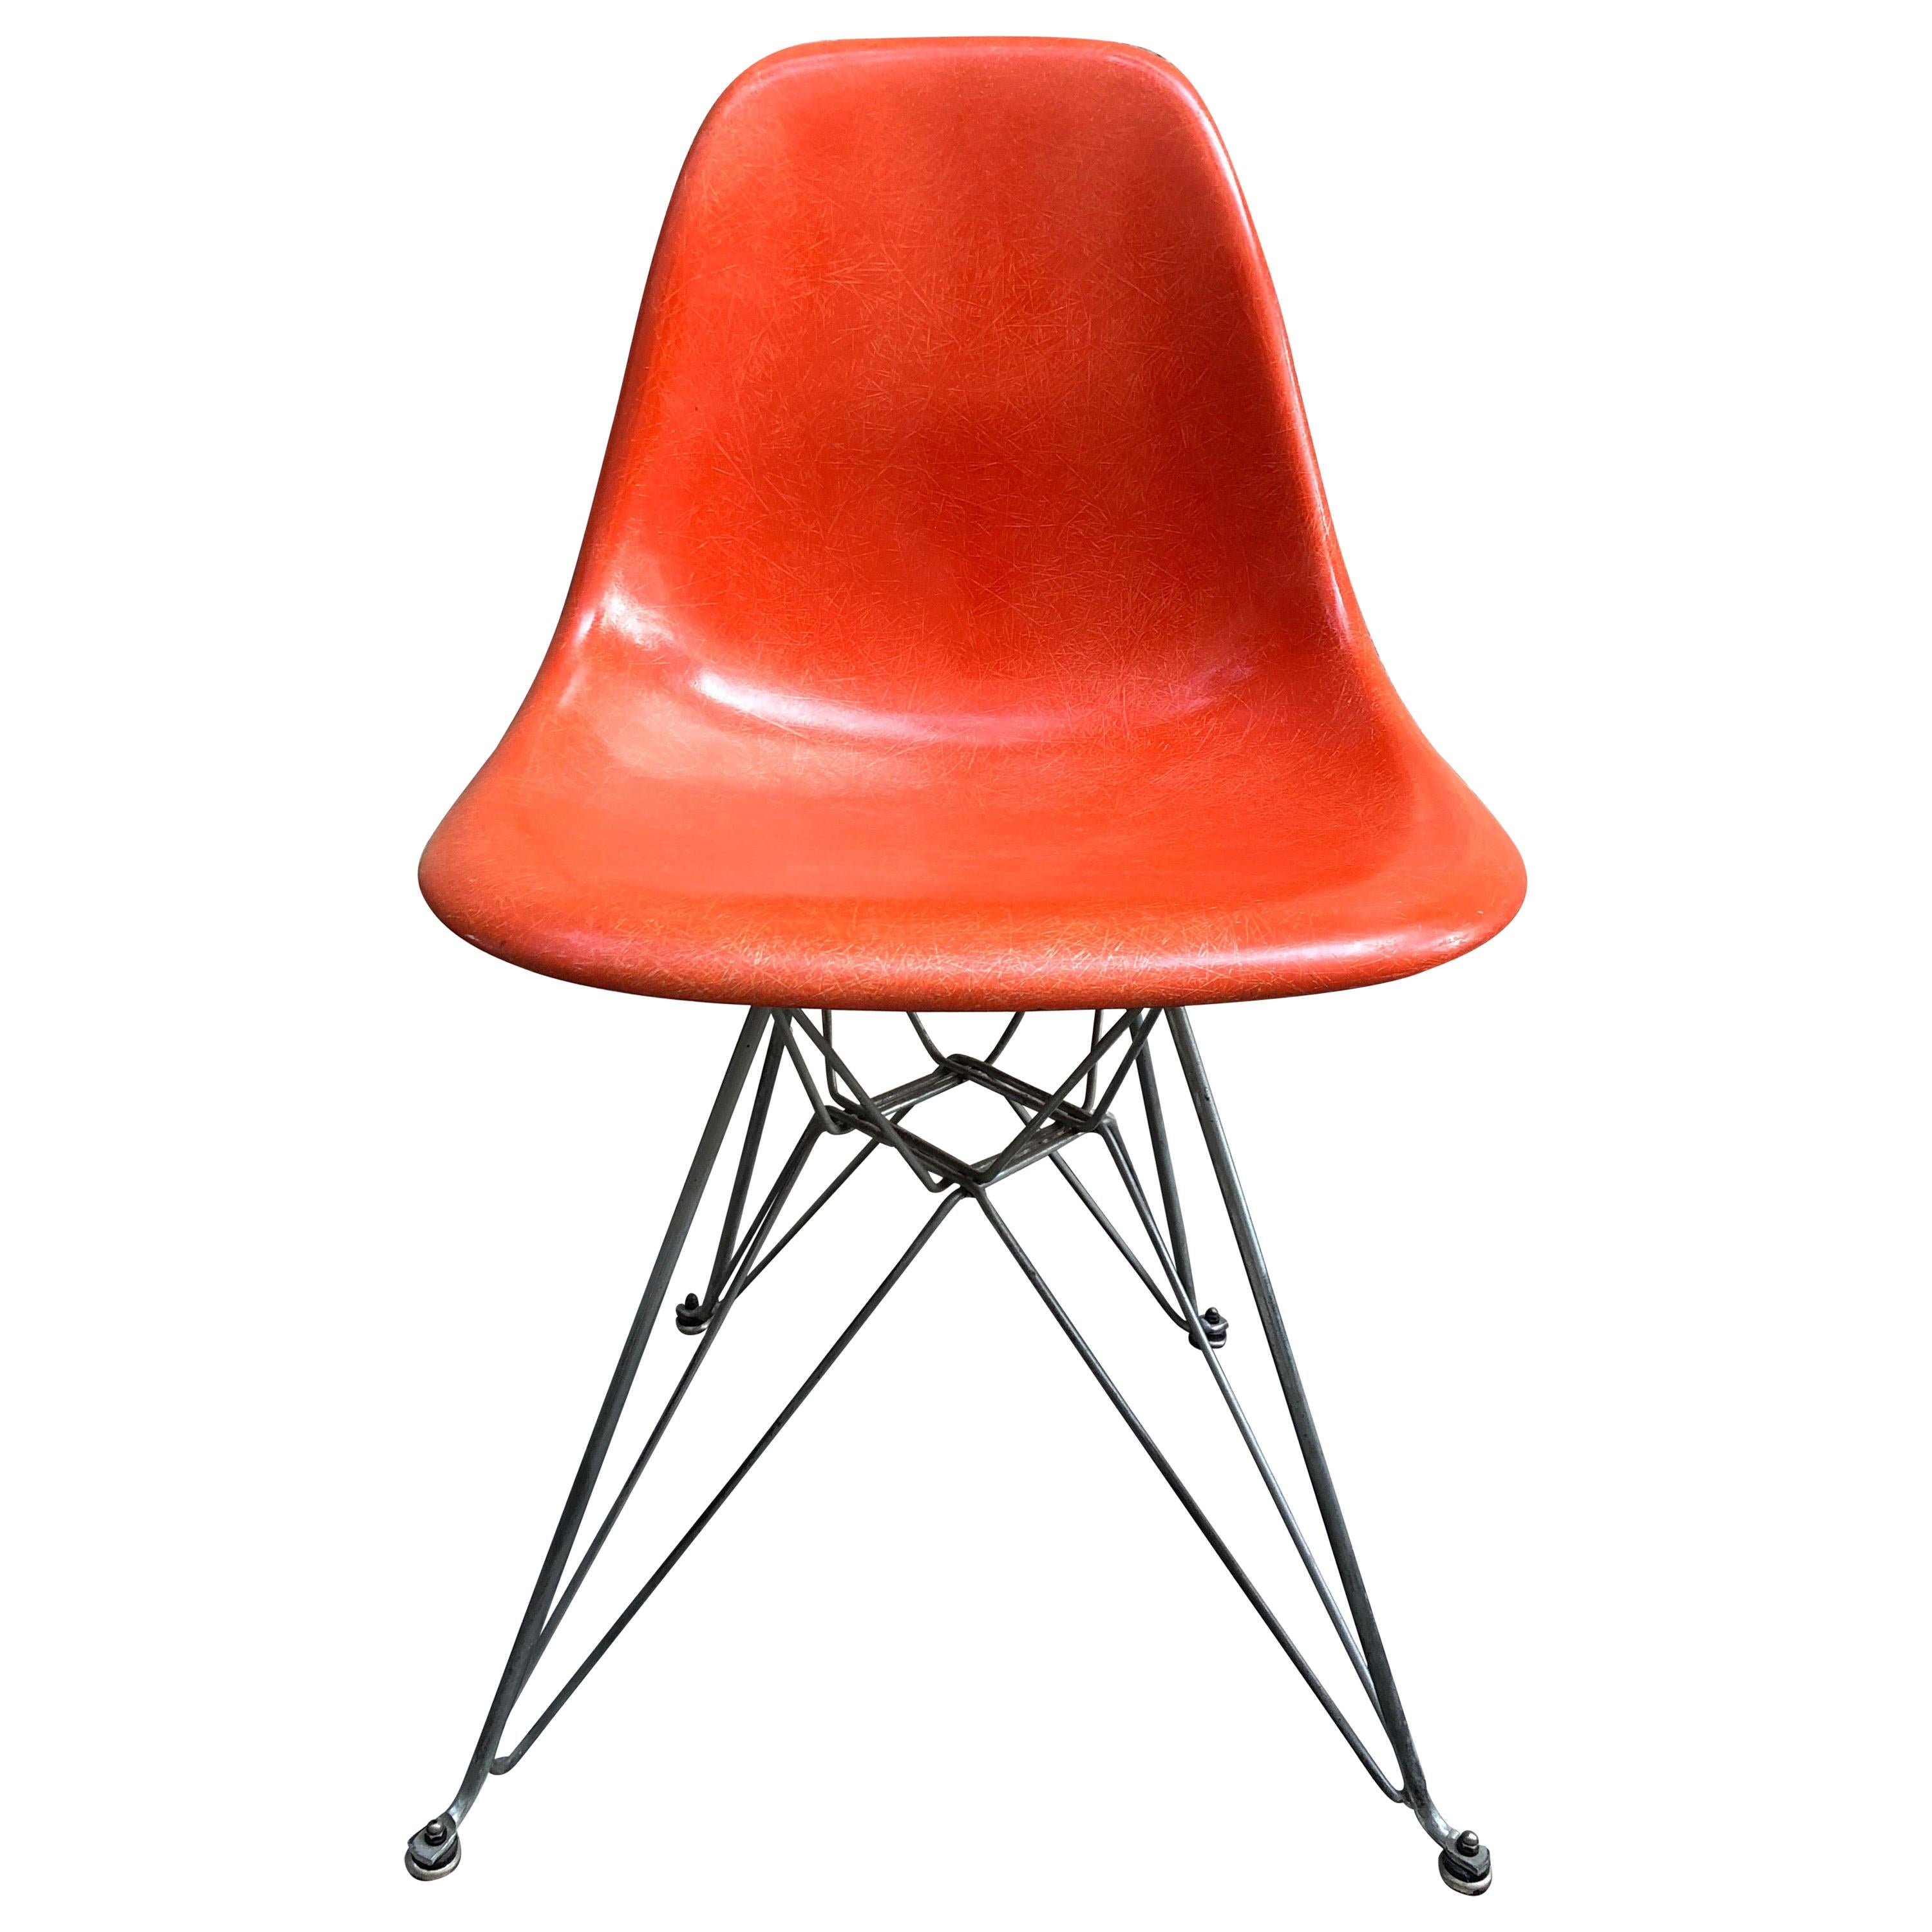 Vintage Herman Miller Fiberglass Shell Chair by Charles Eames, Orange